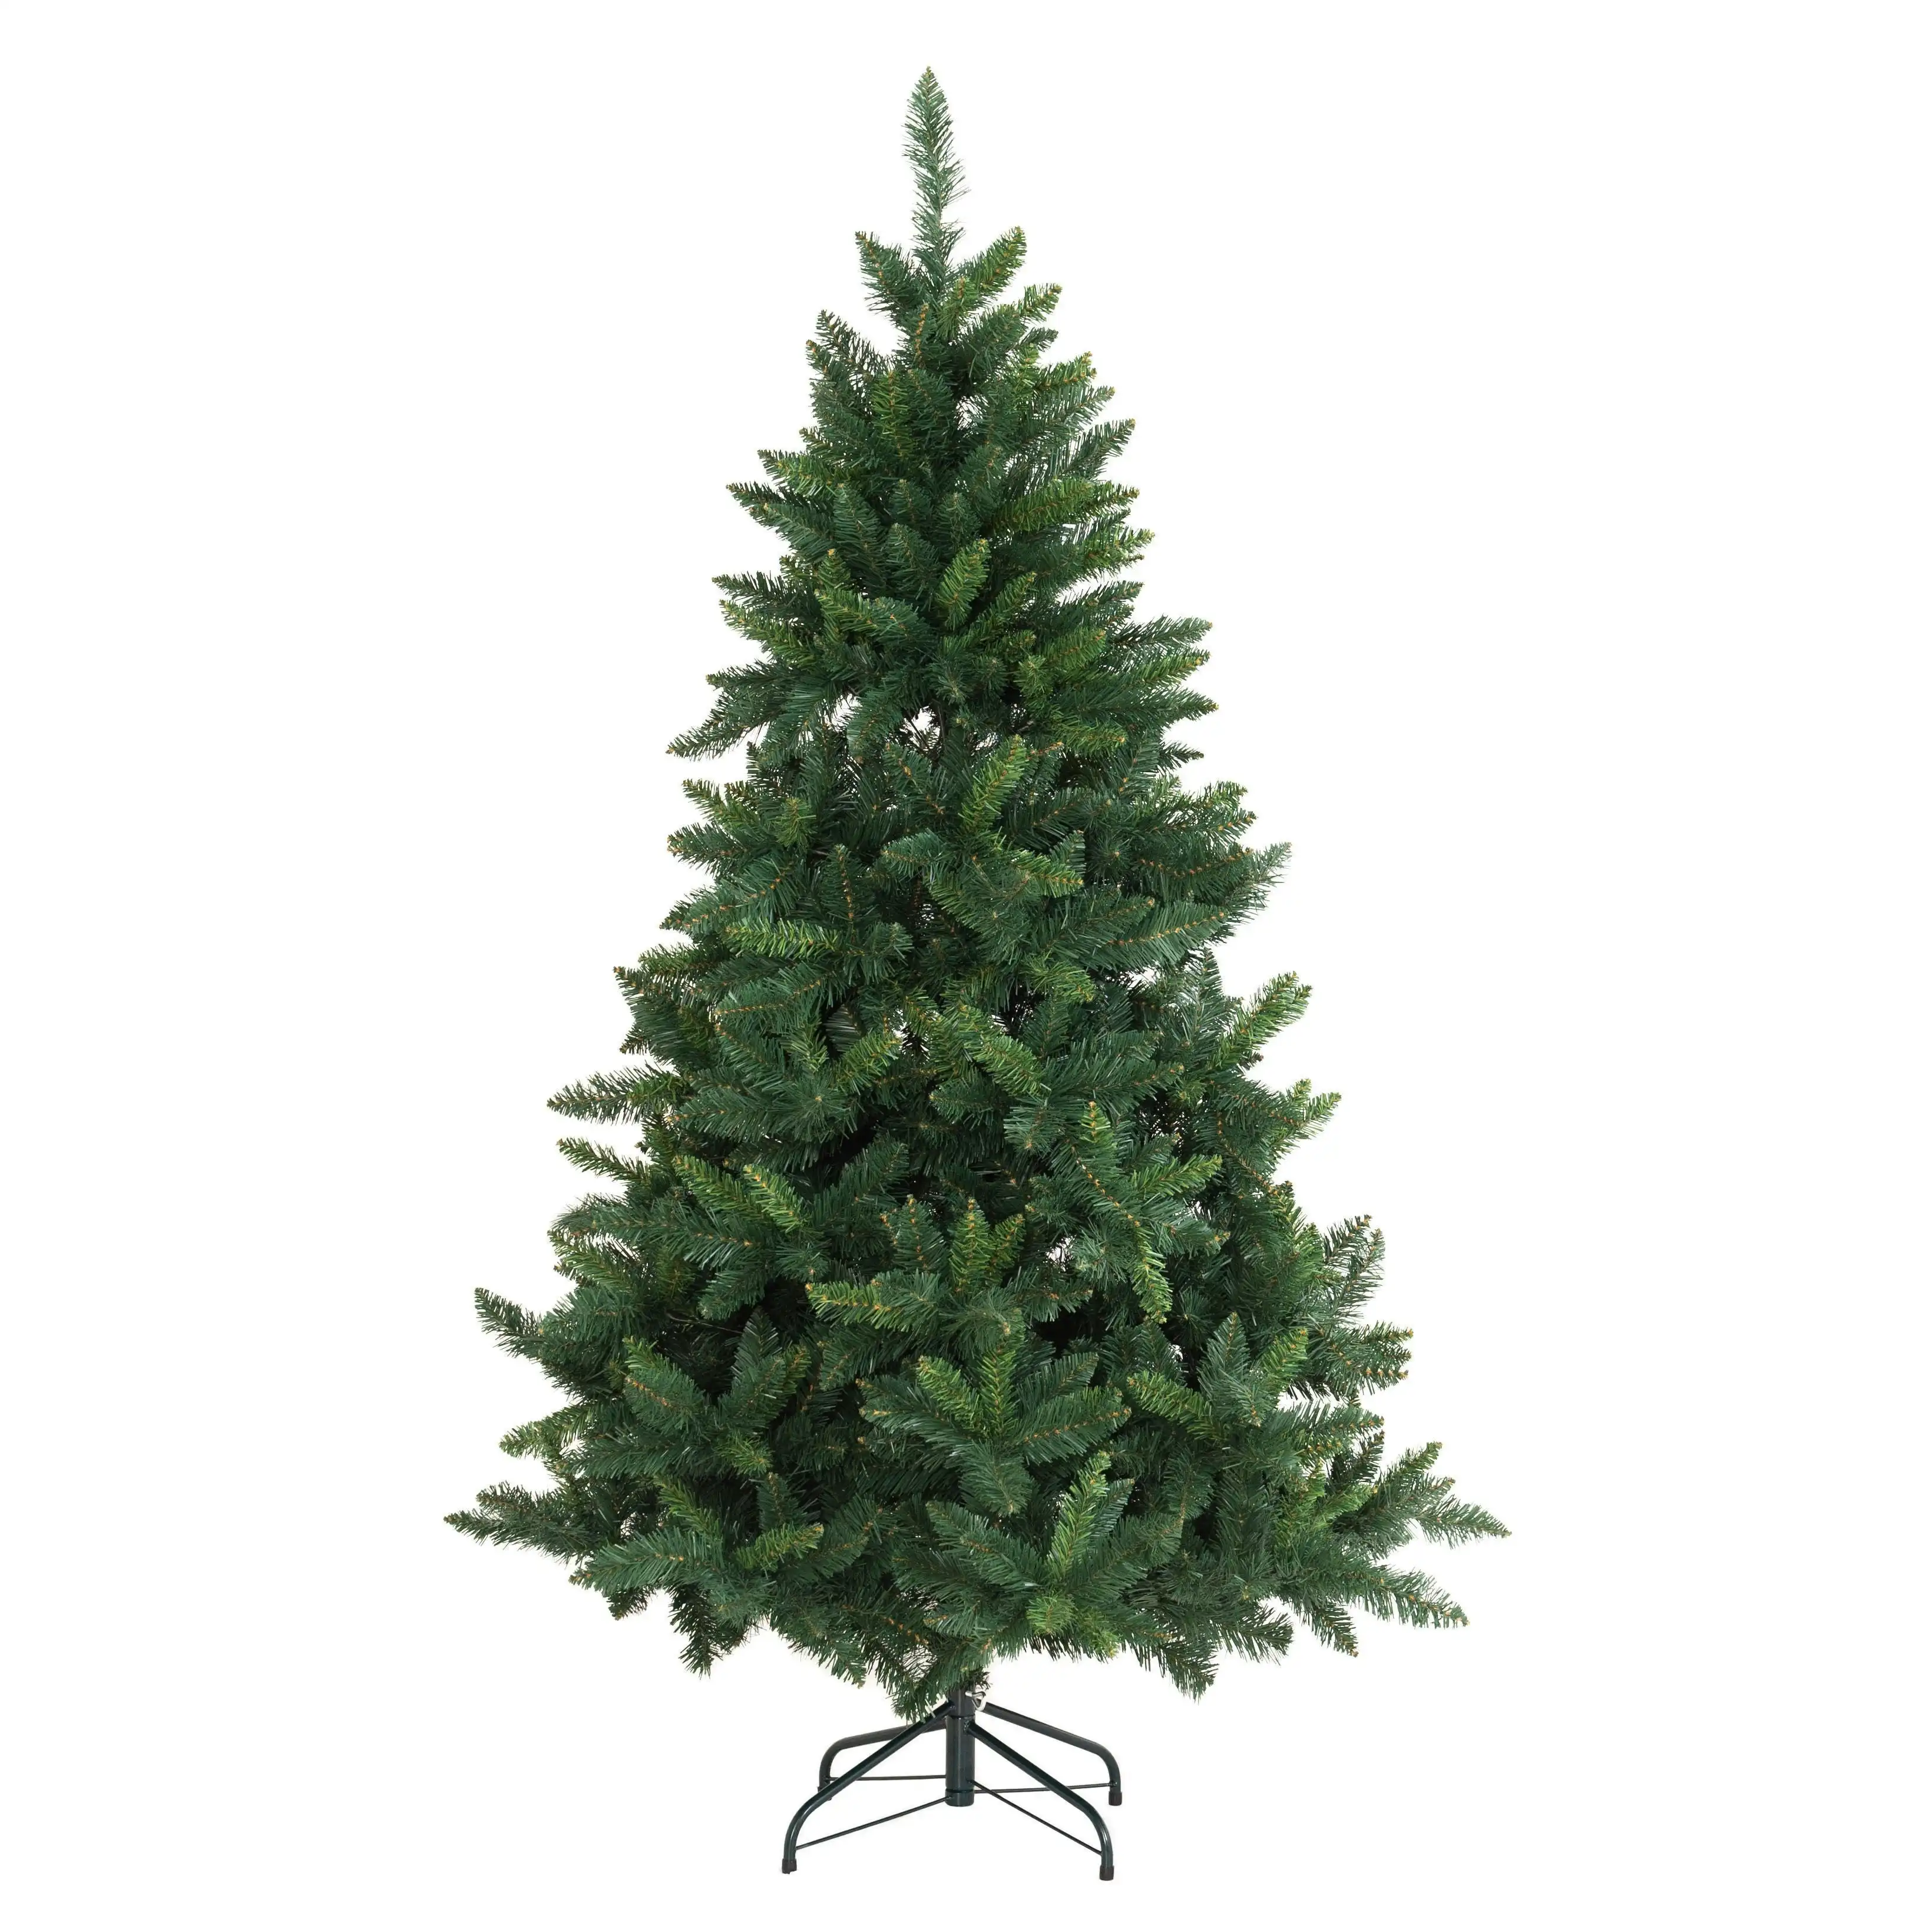 Santa's Helper Christmas Tree With 968 Tips 180cm